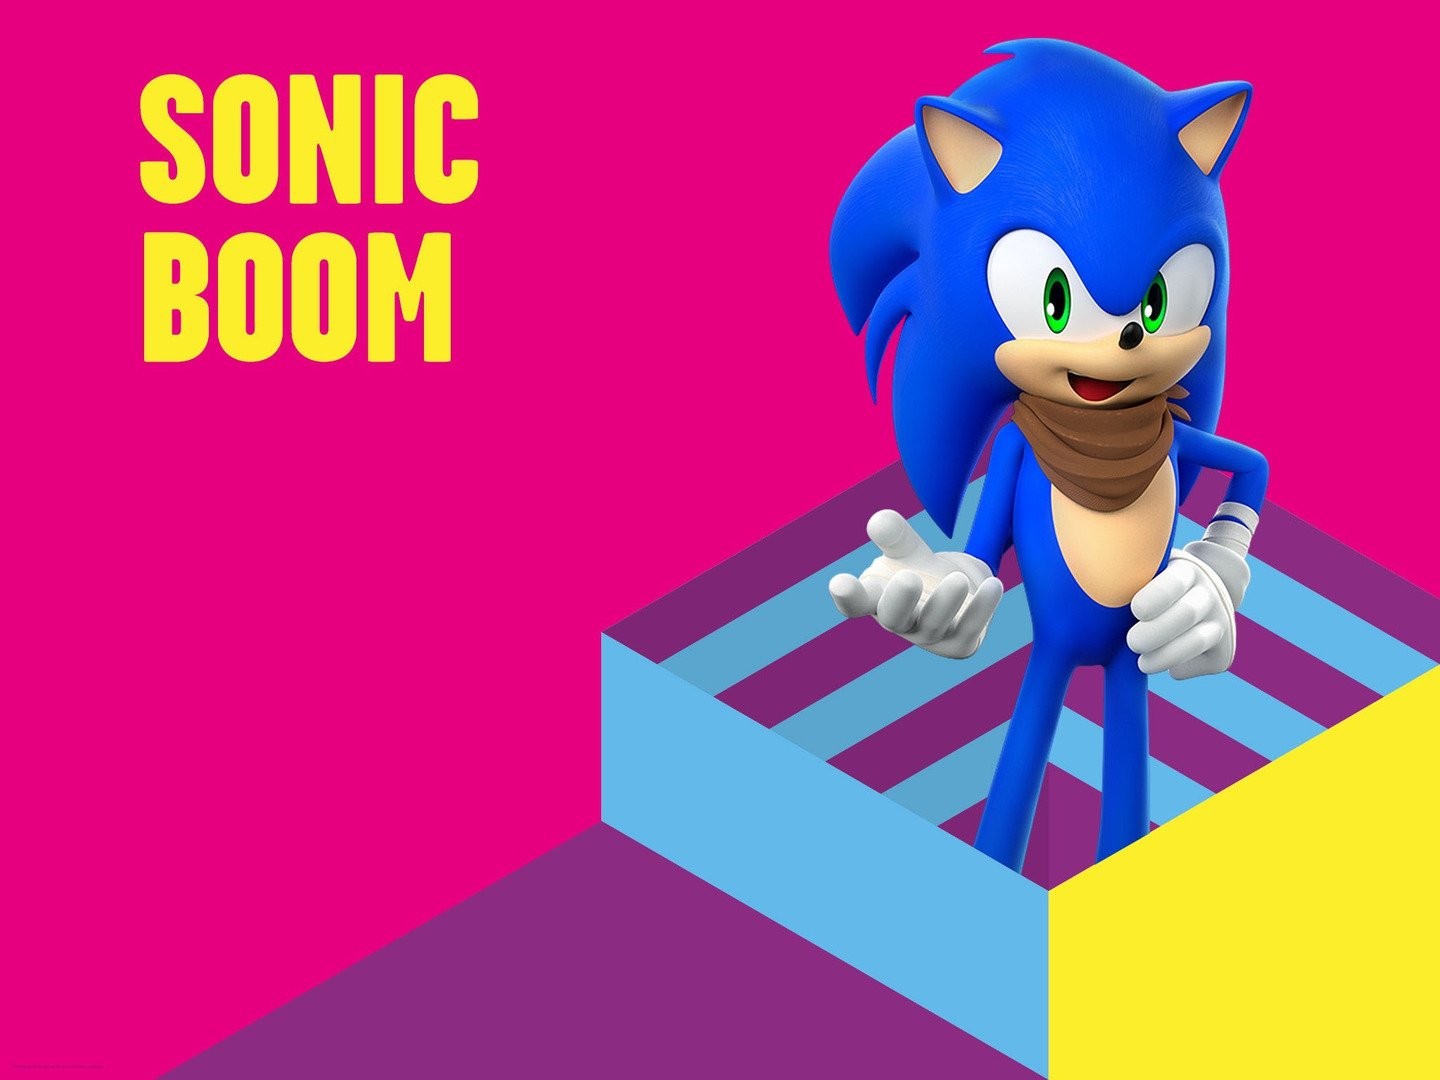 Season 3 of Sonic Boom (TV) was deconfirmed according to Wikipedia